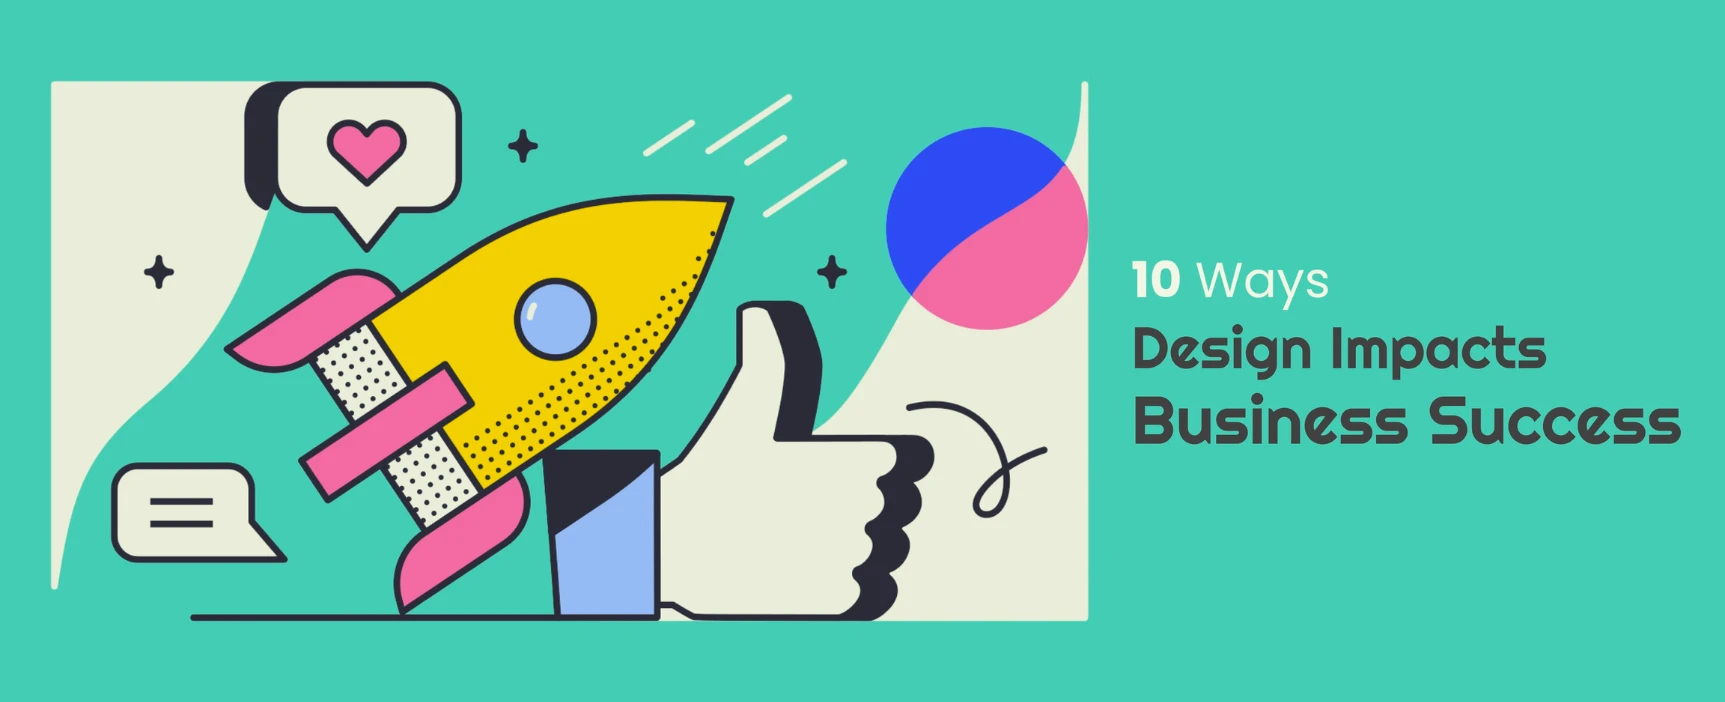 10 Ways Design Impacts Business Success